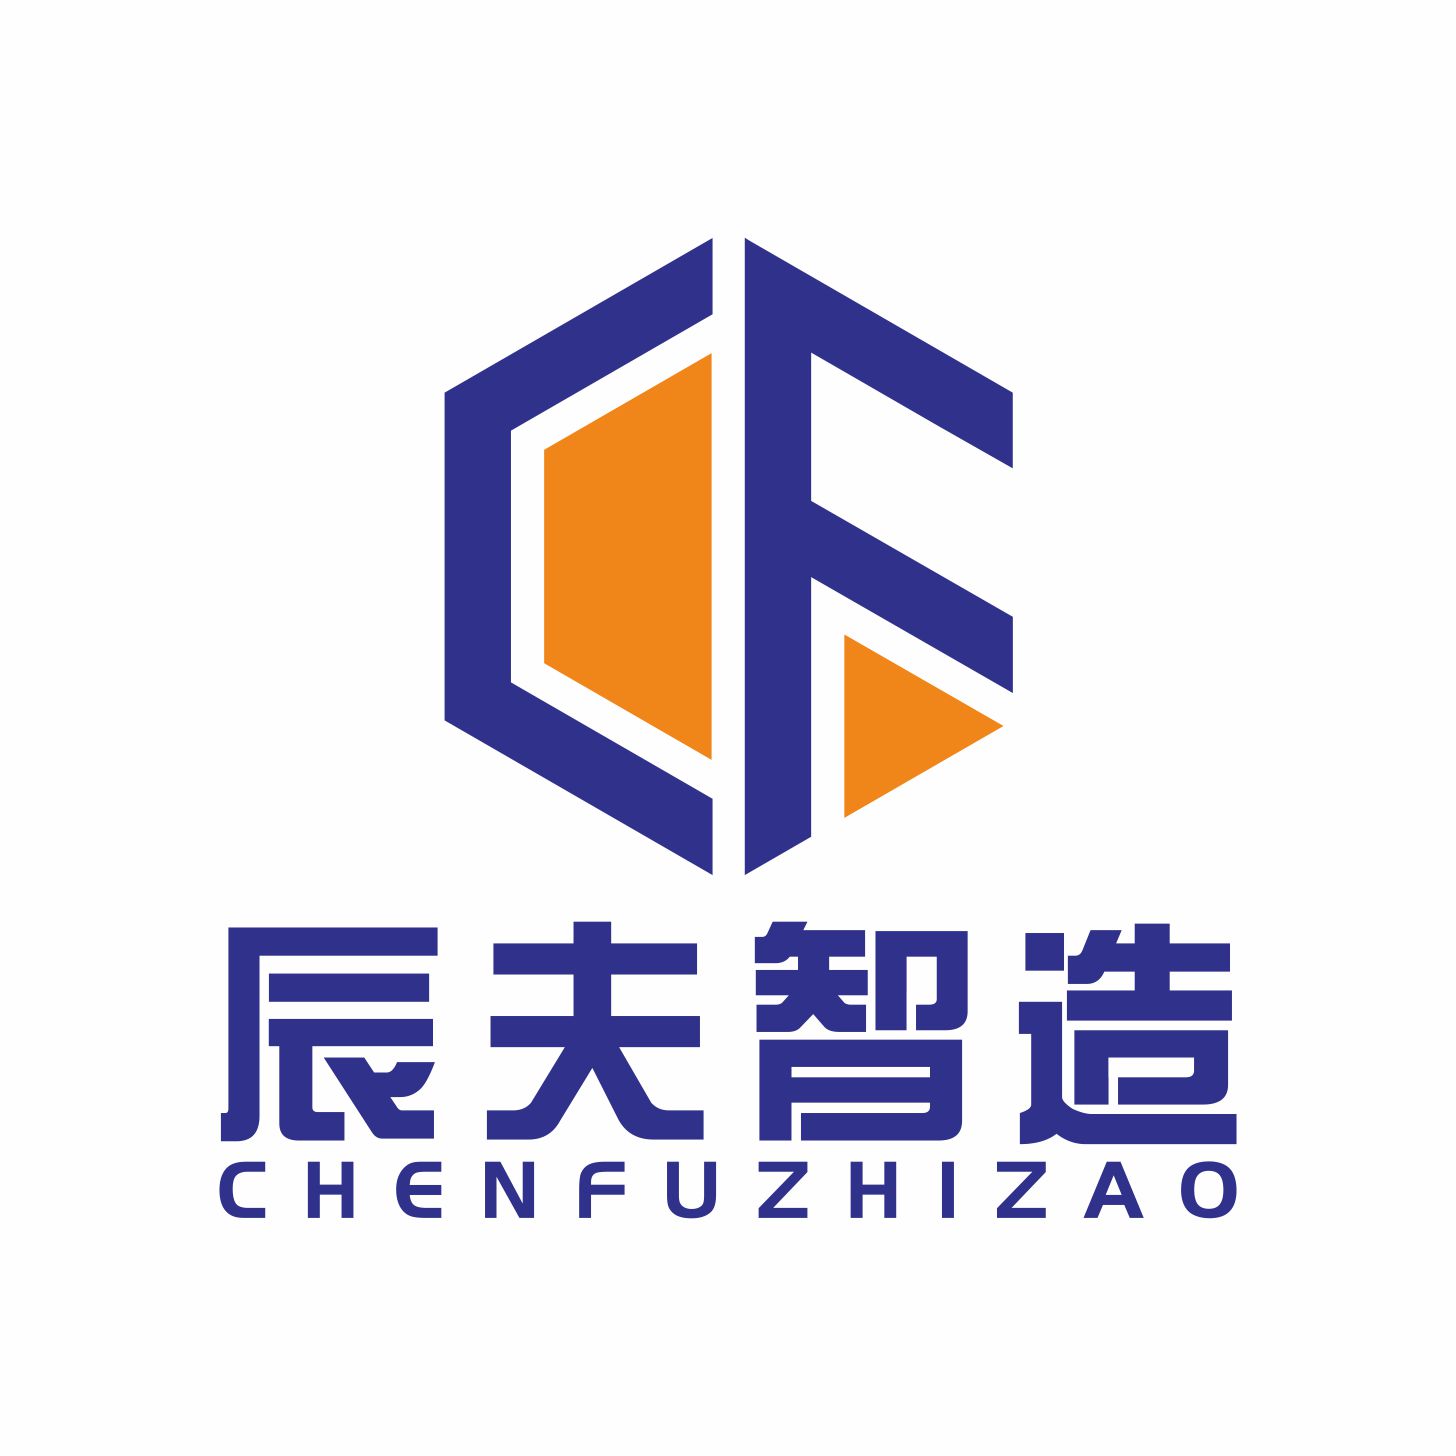 Chenfuzhizao